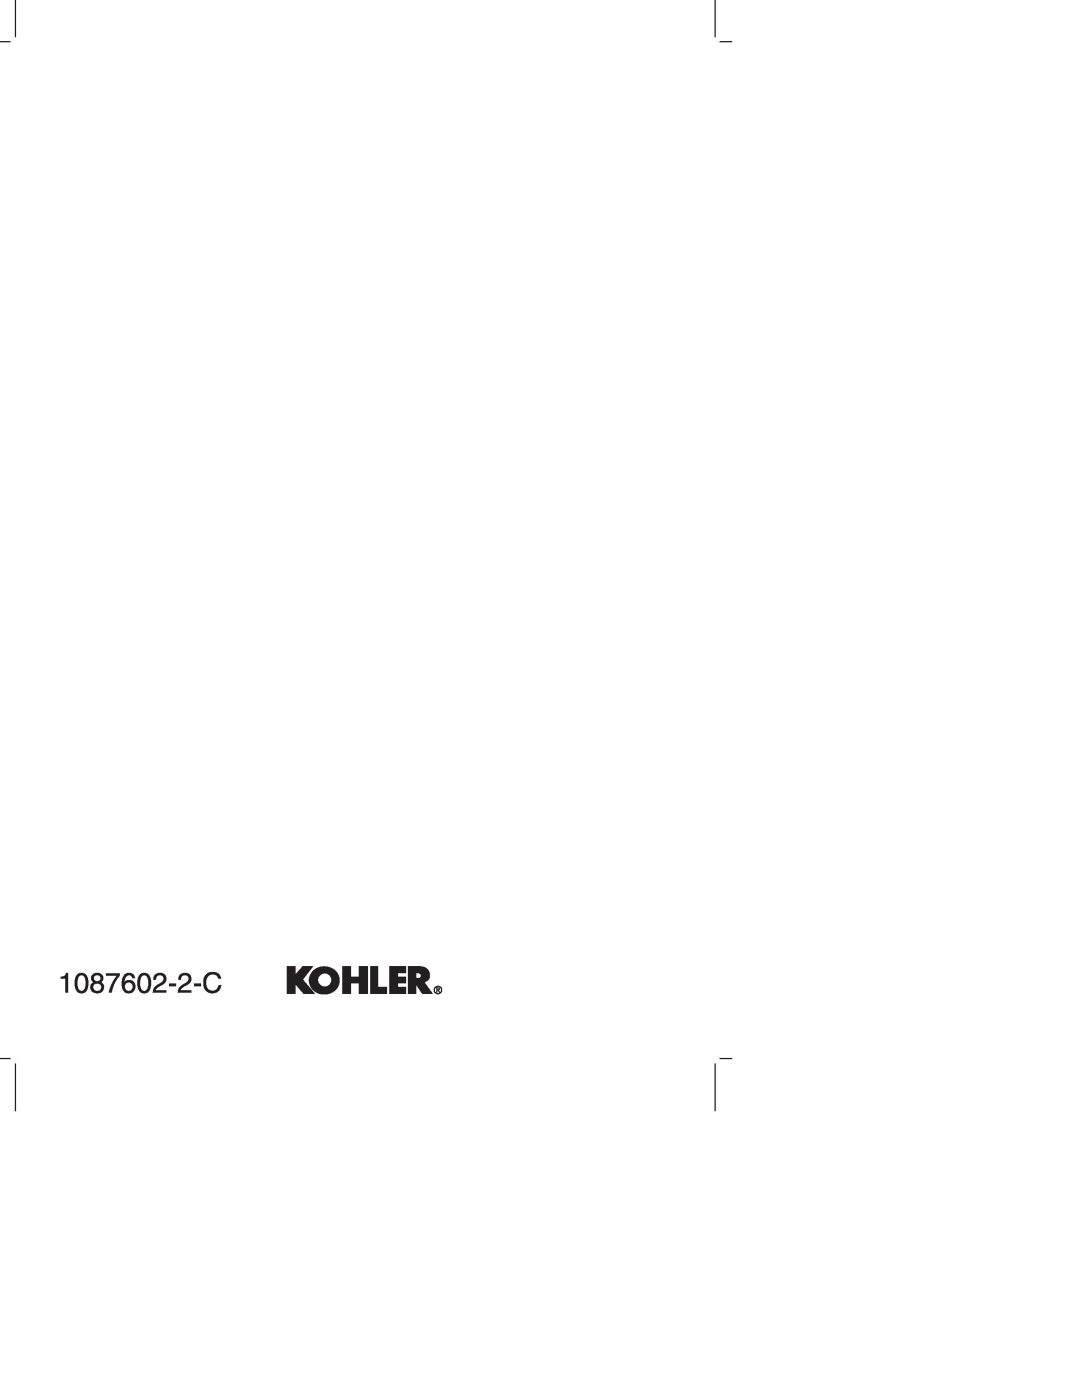 Kohler K-3564, K-14338 manual 1087602-2-C 